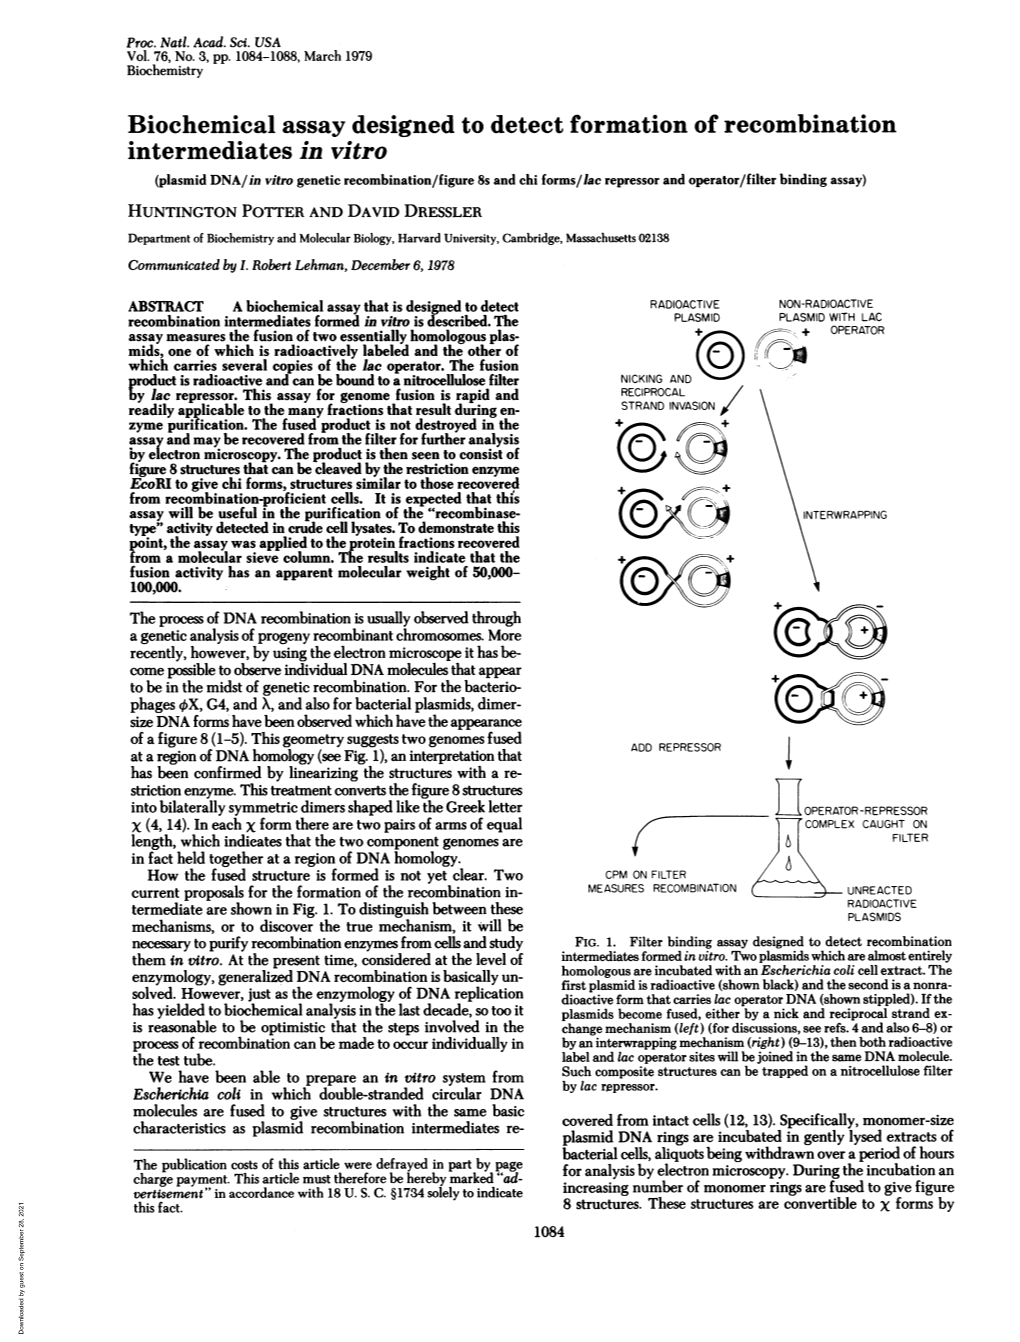 Biochemical Assay Designed to Detect Formation of Recombination Intermediates in Vitro